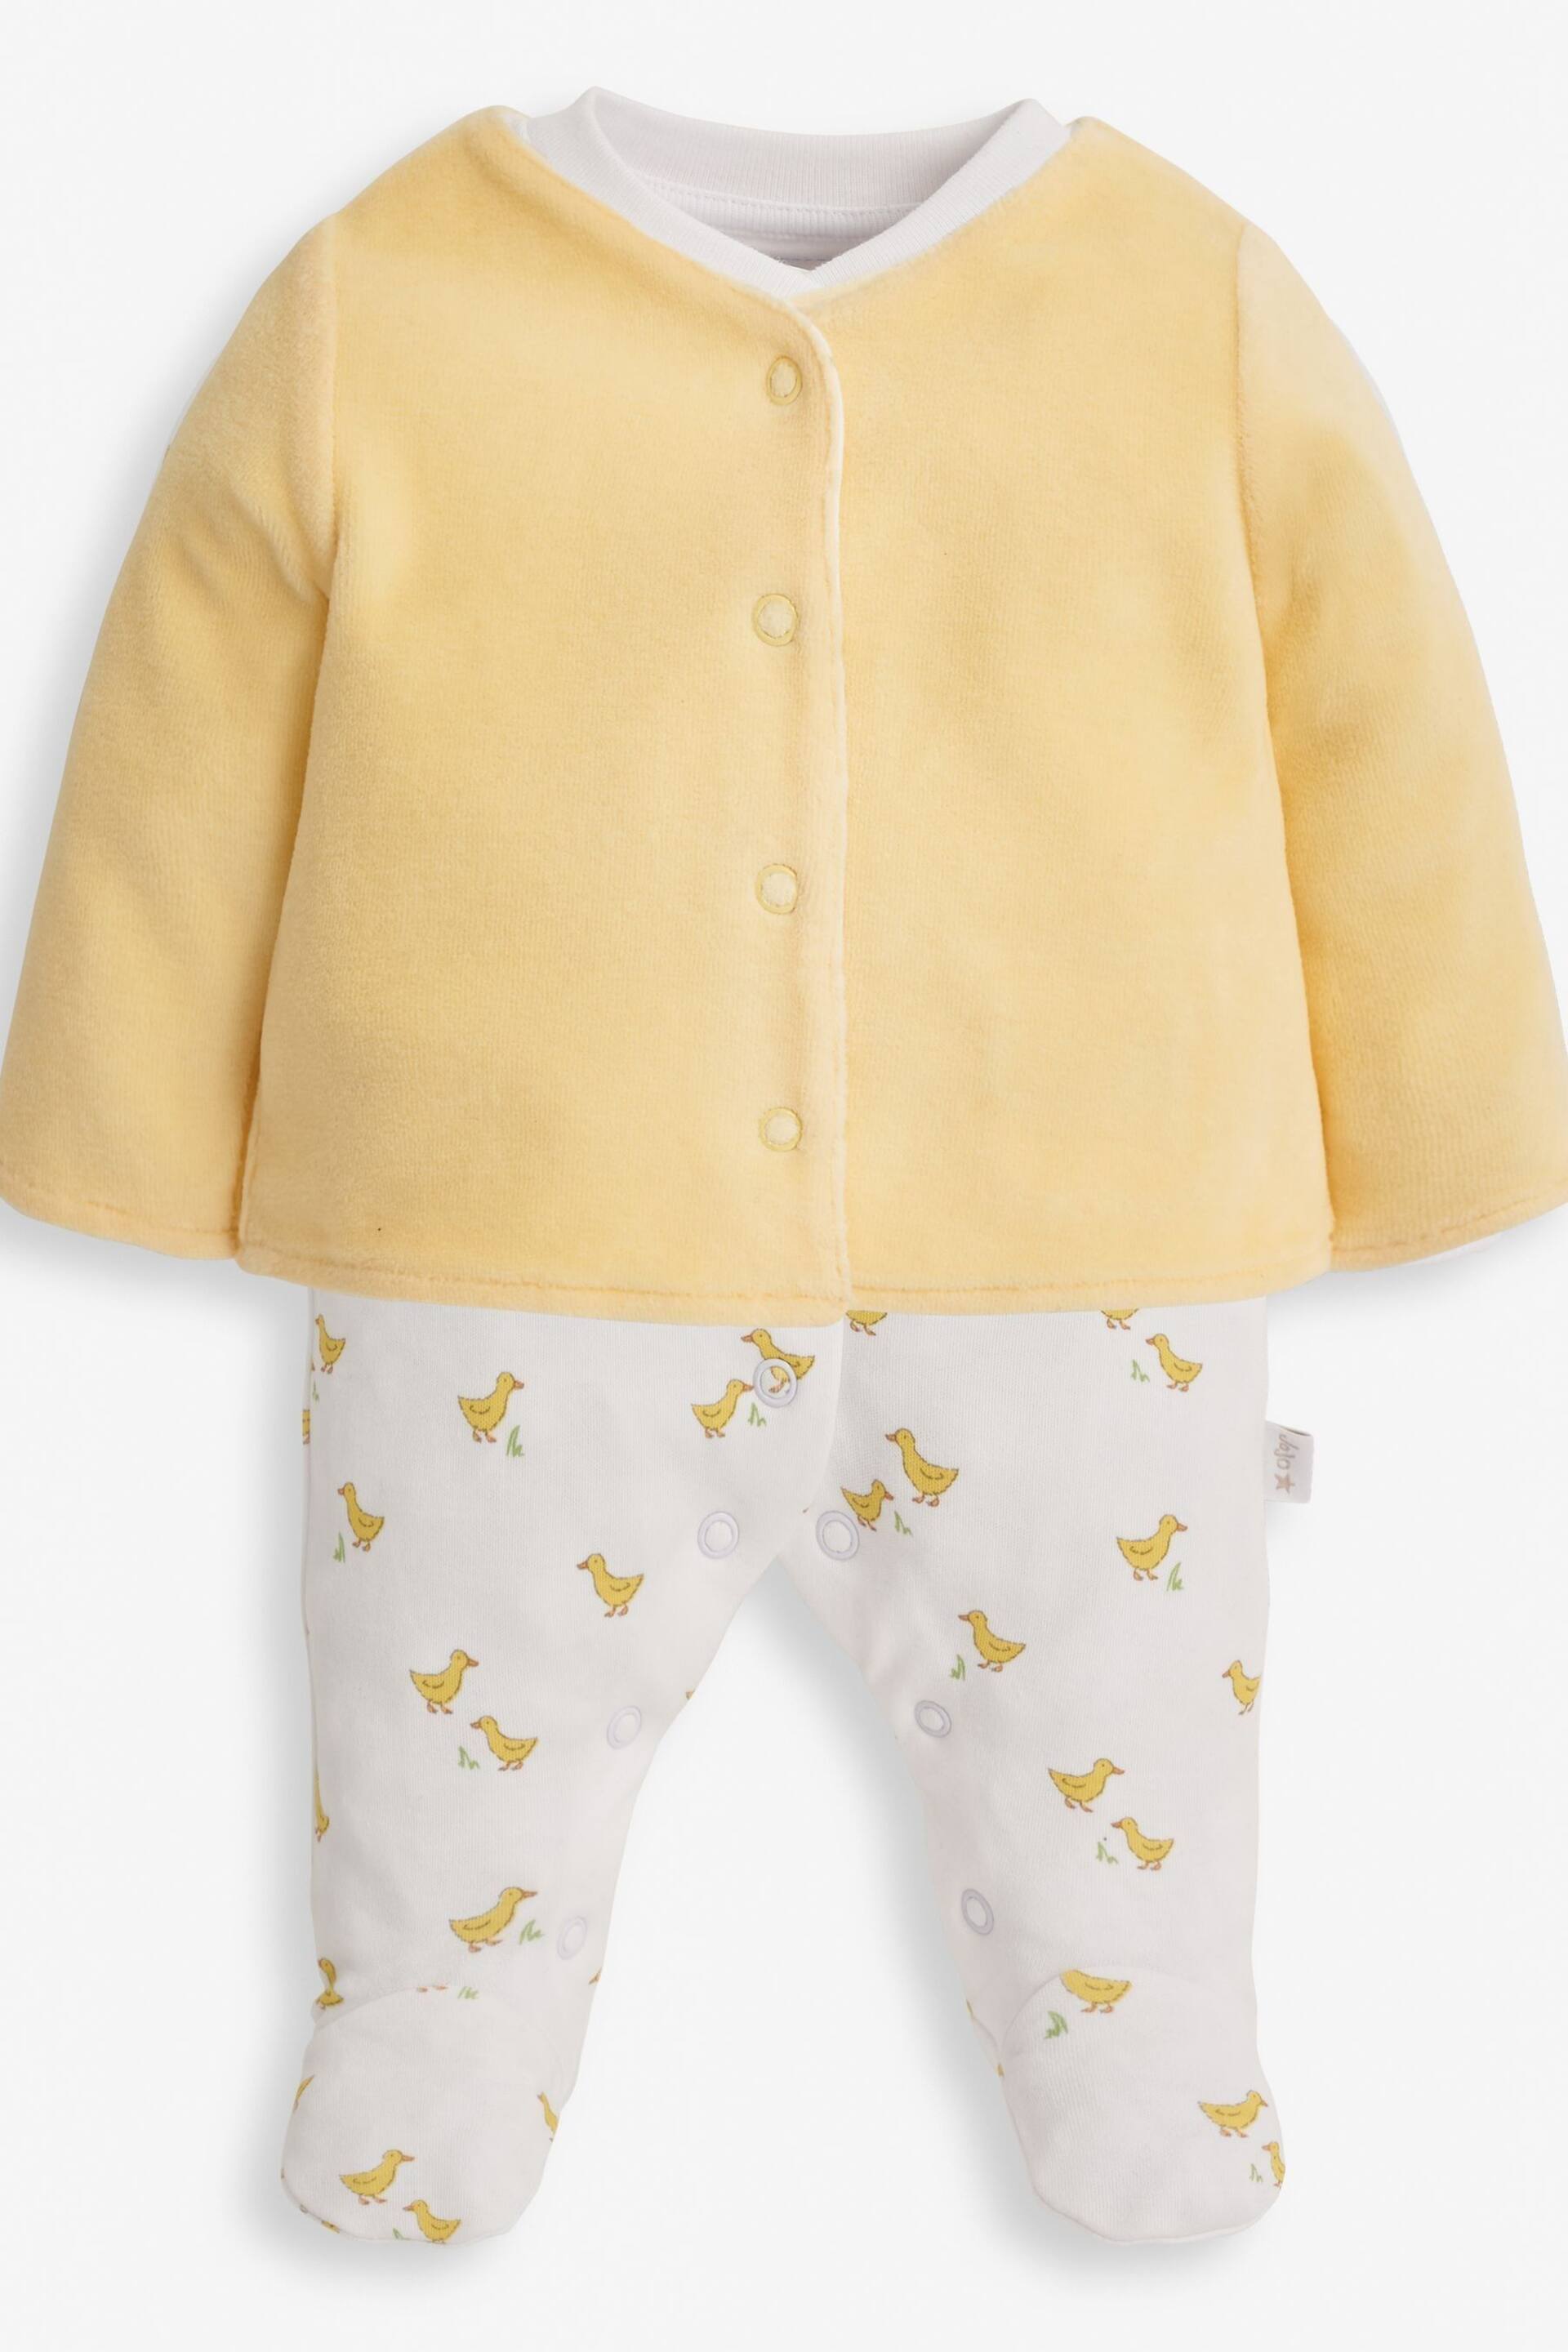 JoJo Maman Bébé Yellow Duck 2-Piece Baby Sleepsuit & Velour Jacket Set - Image 1 of 6